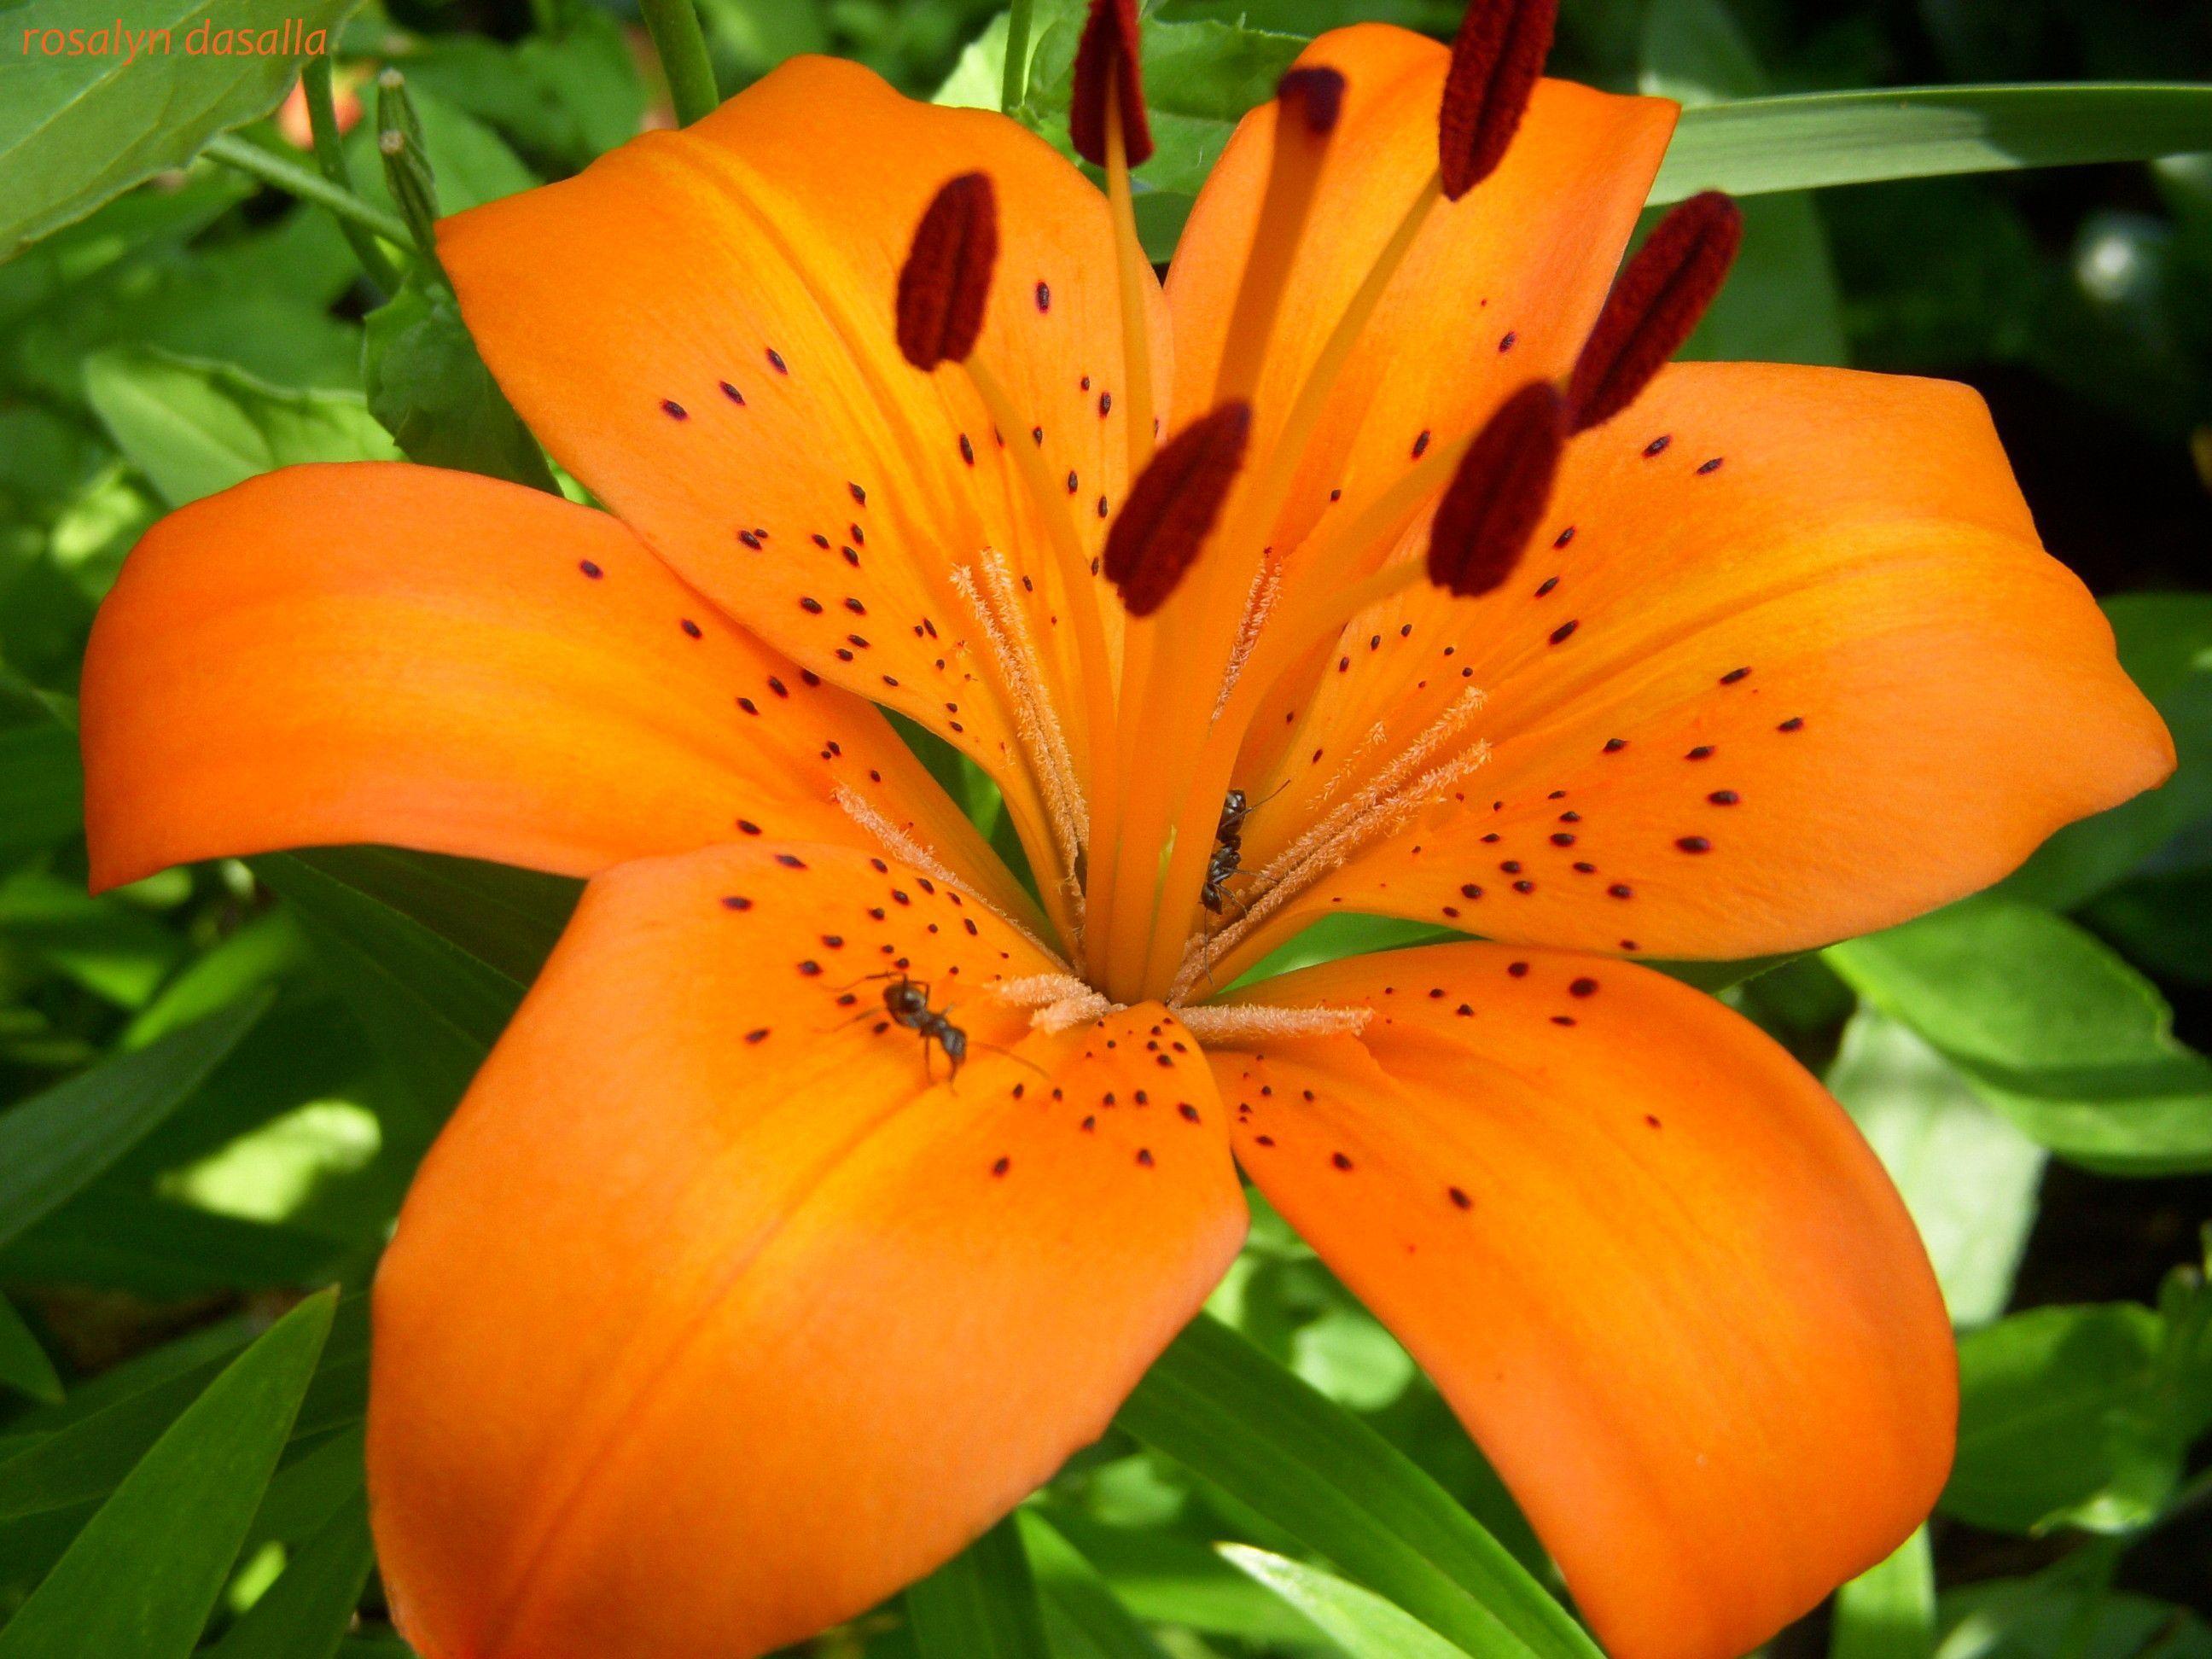 Tiger lily flower